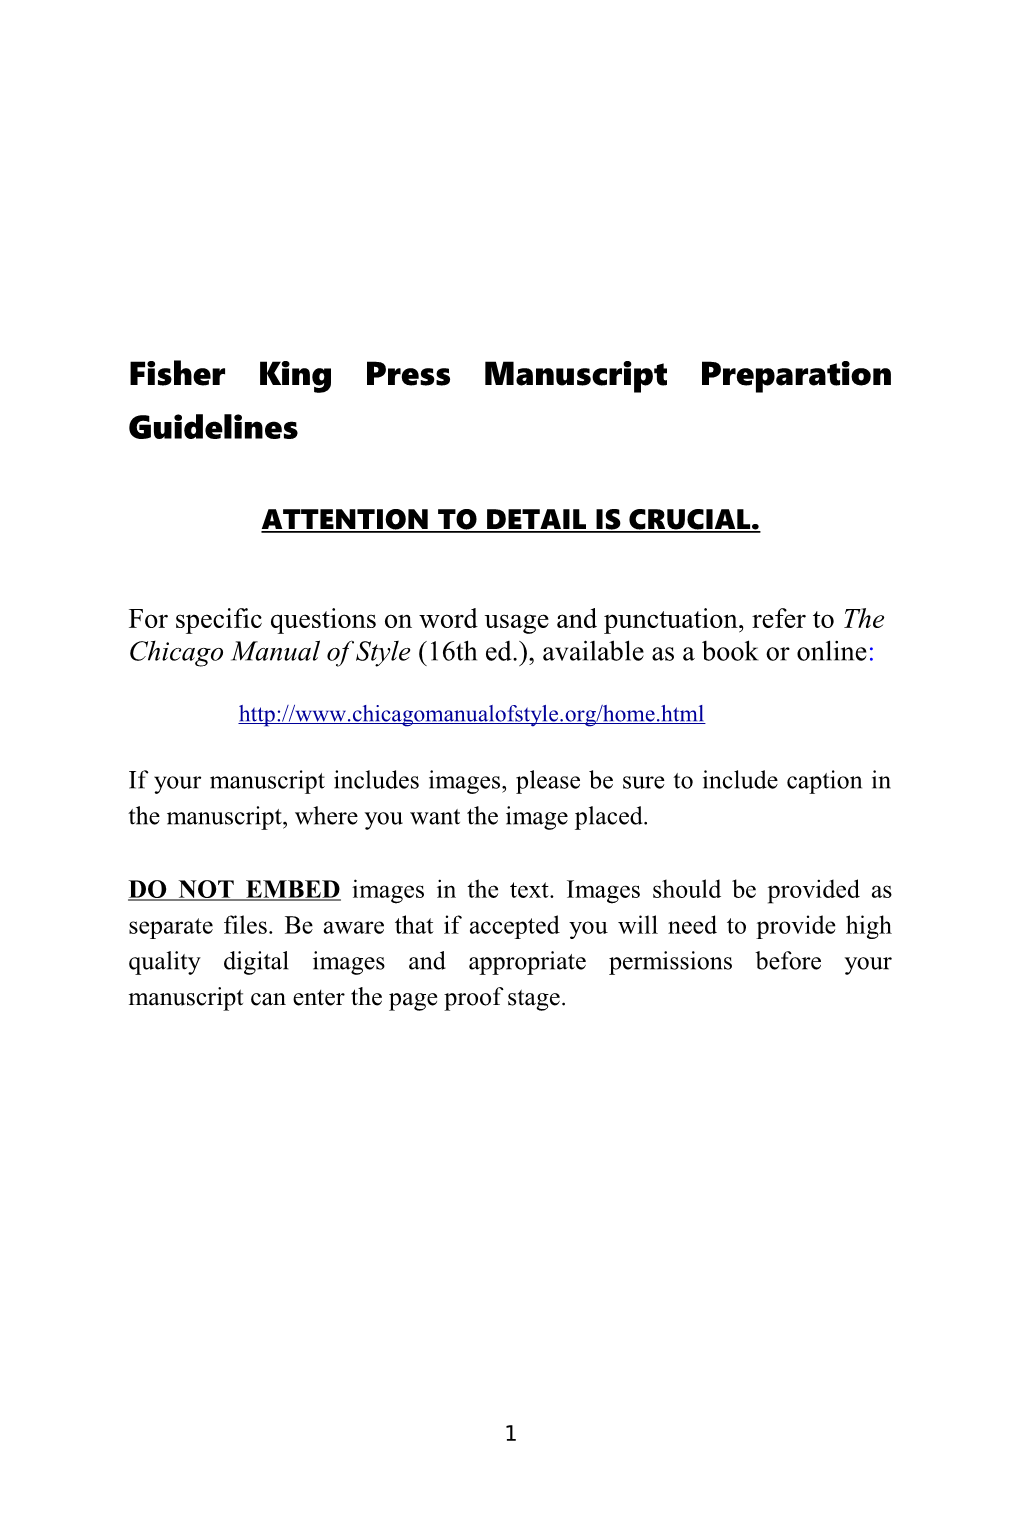 Manuscript Preparation Guidelines & Template for Fisher King Press / Il Piccolo Editions